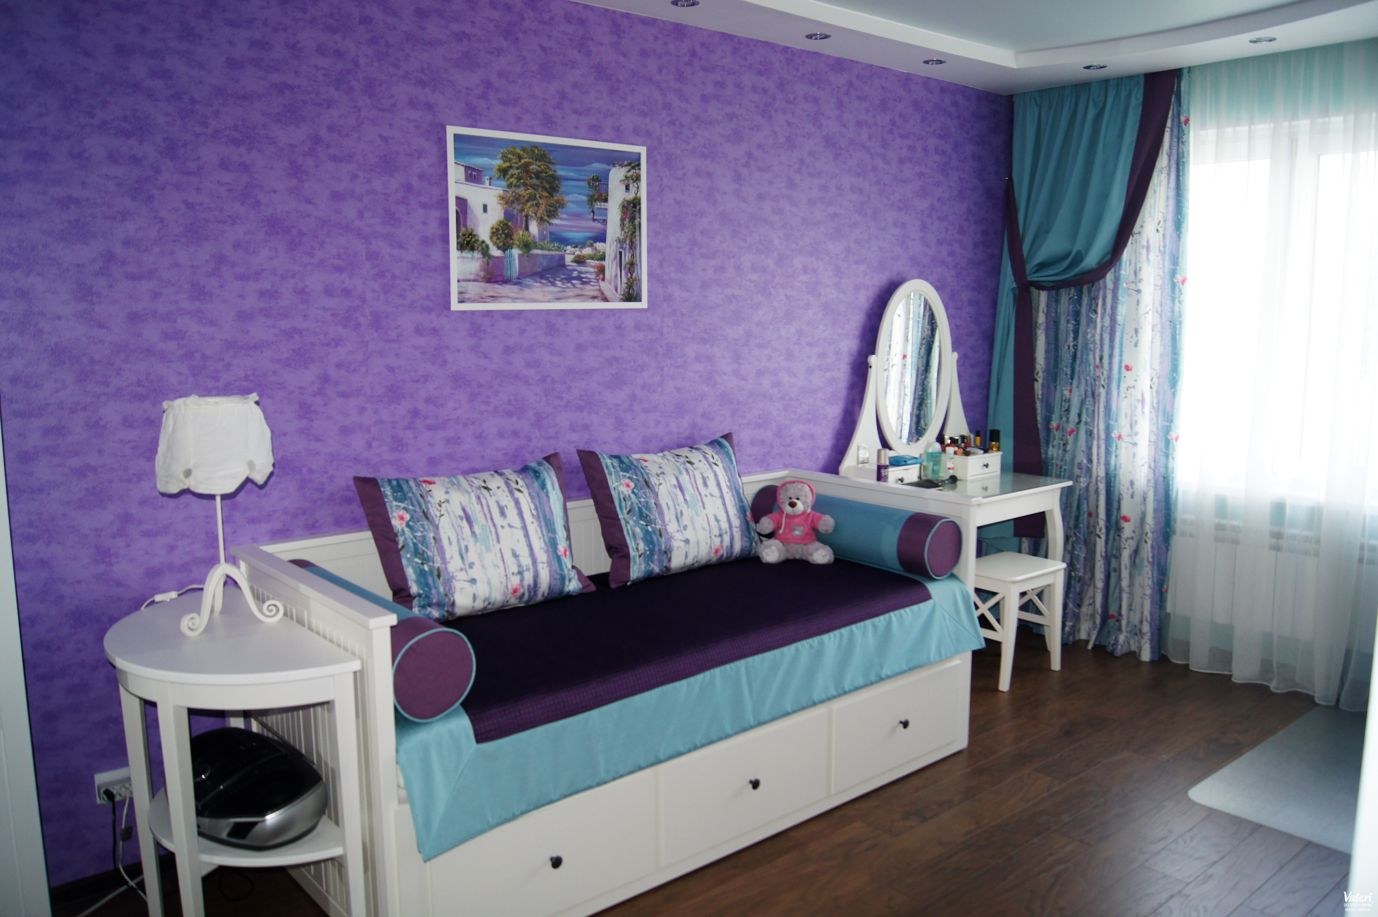 Комната в фиолетово бирюзовых тонах